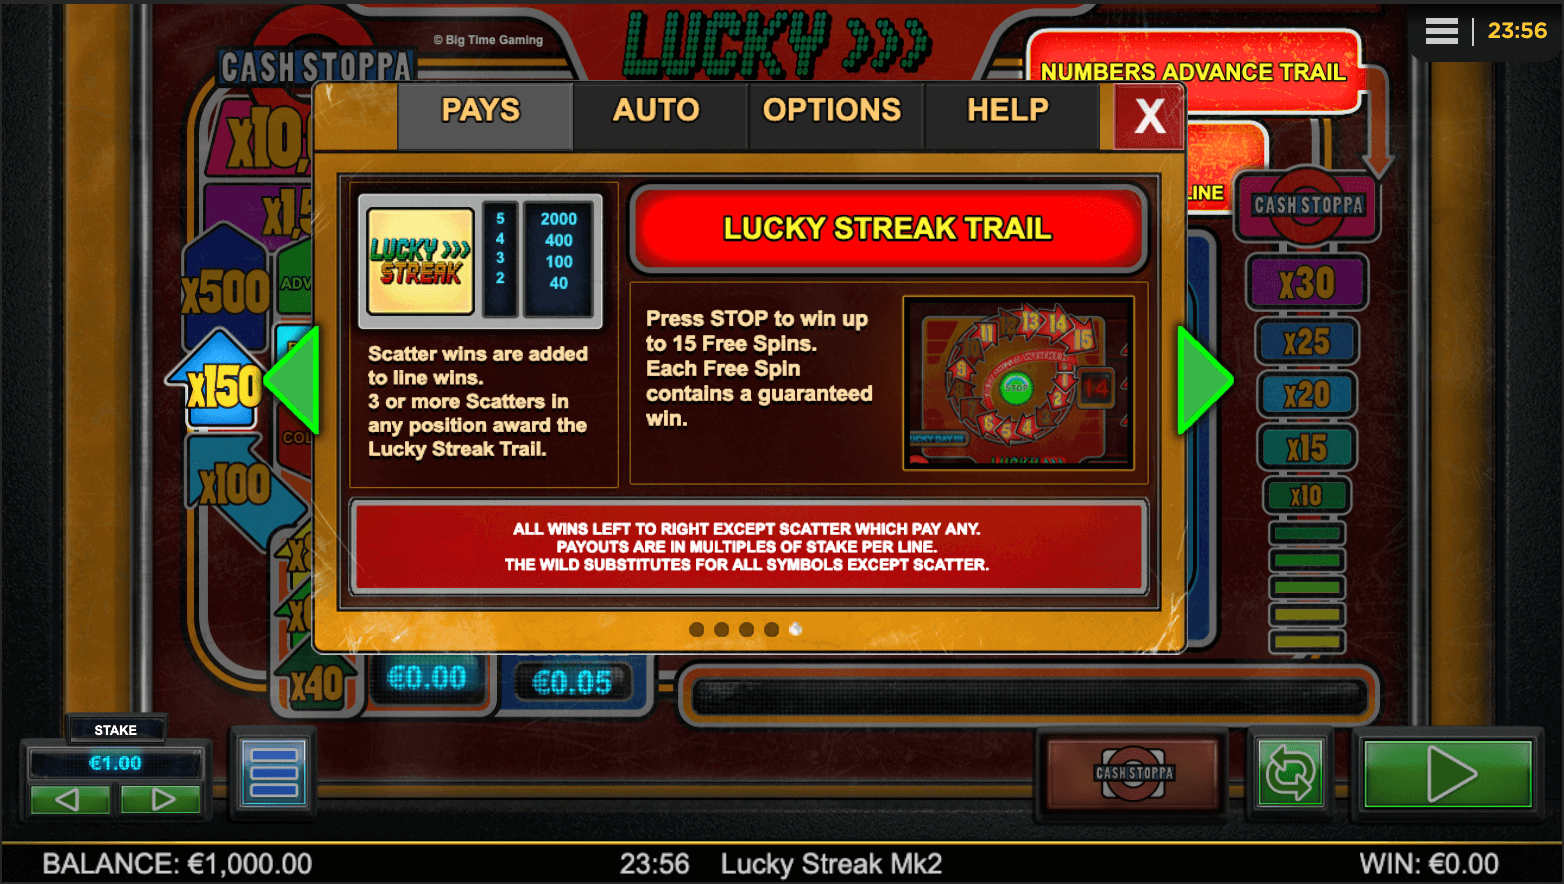 Lucky Streak Mk2 Game process